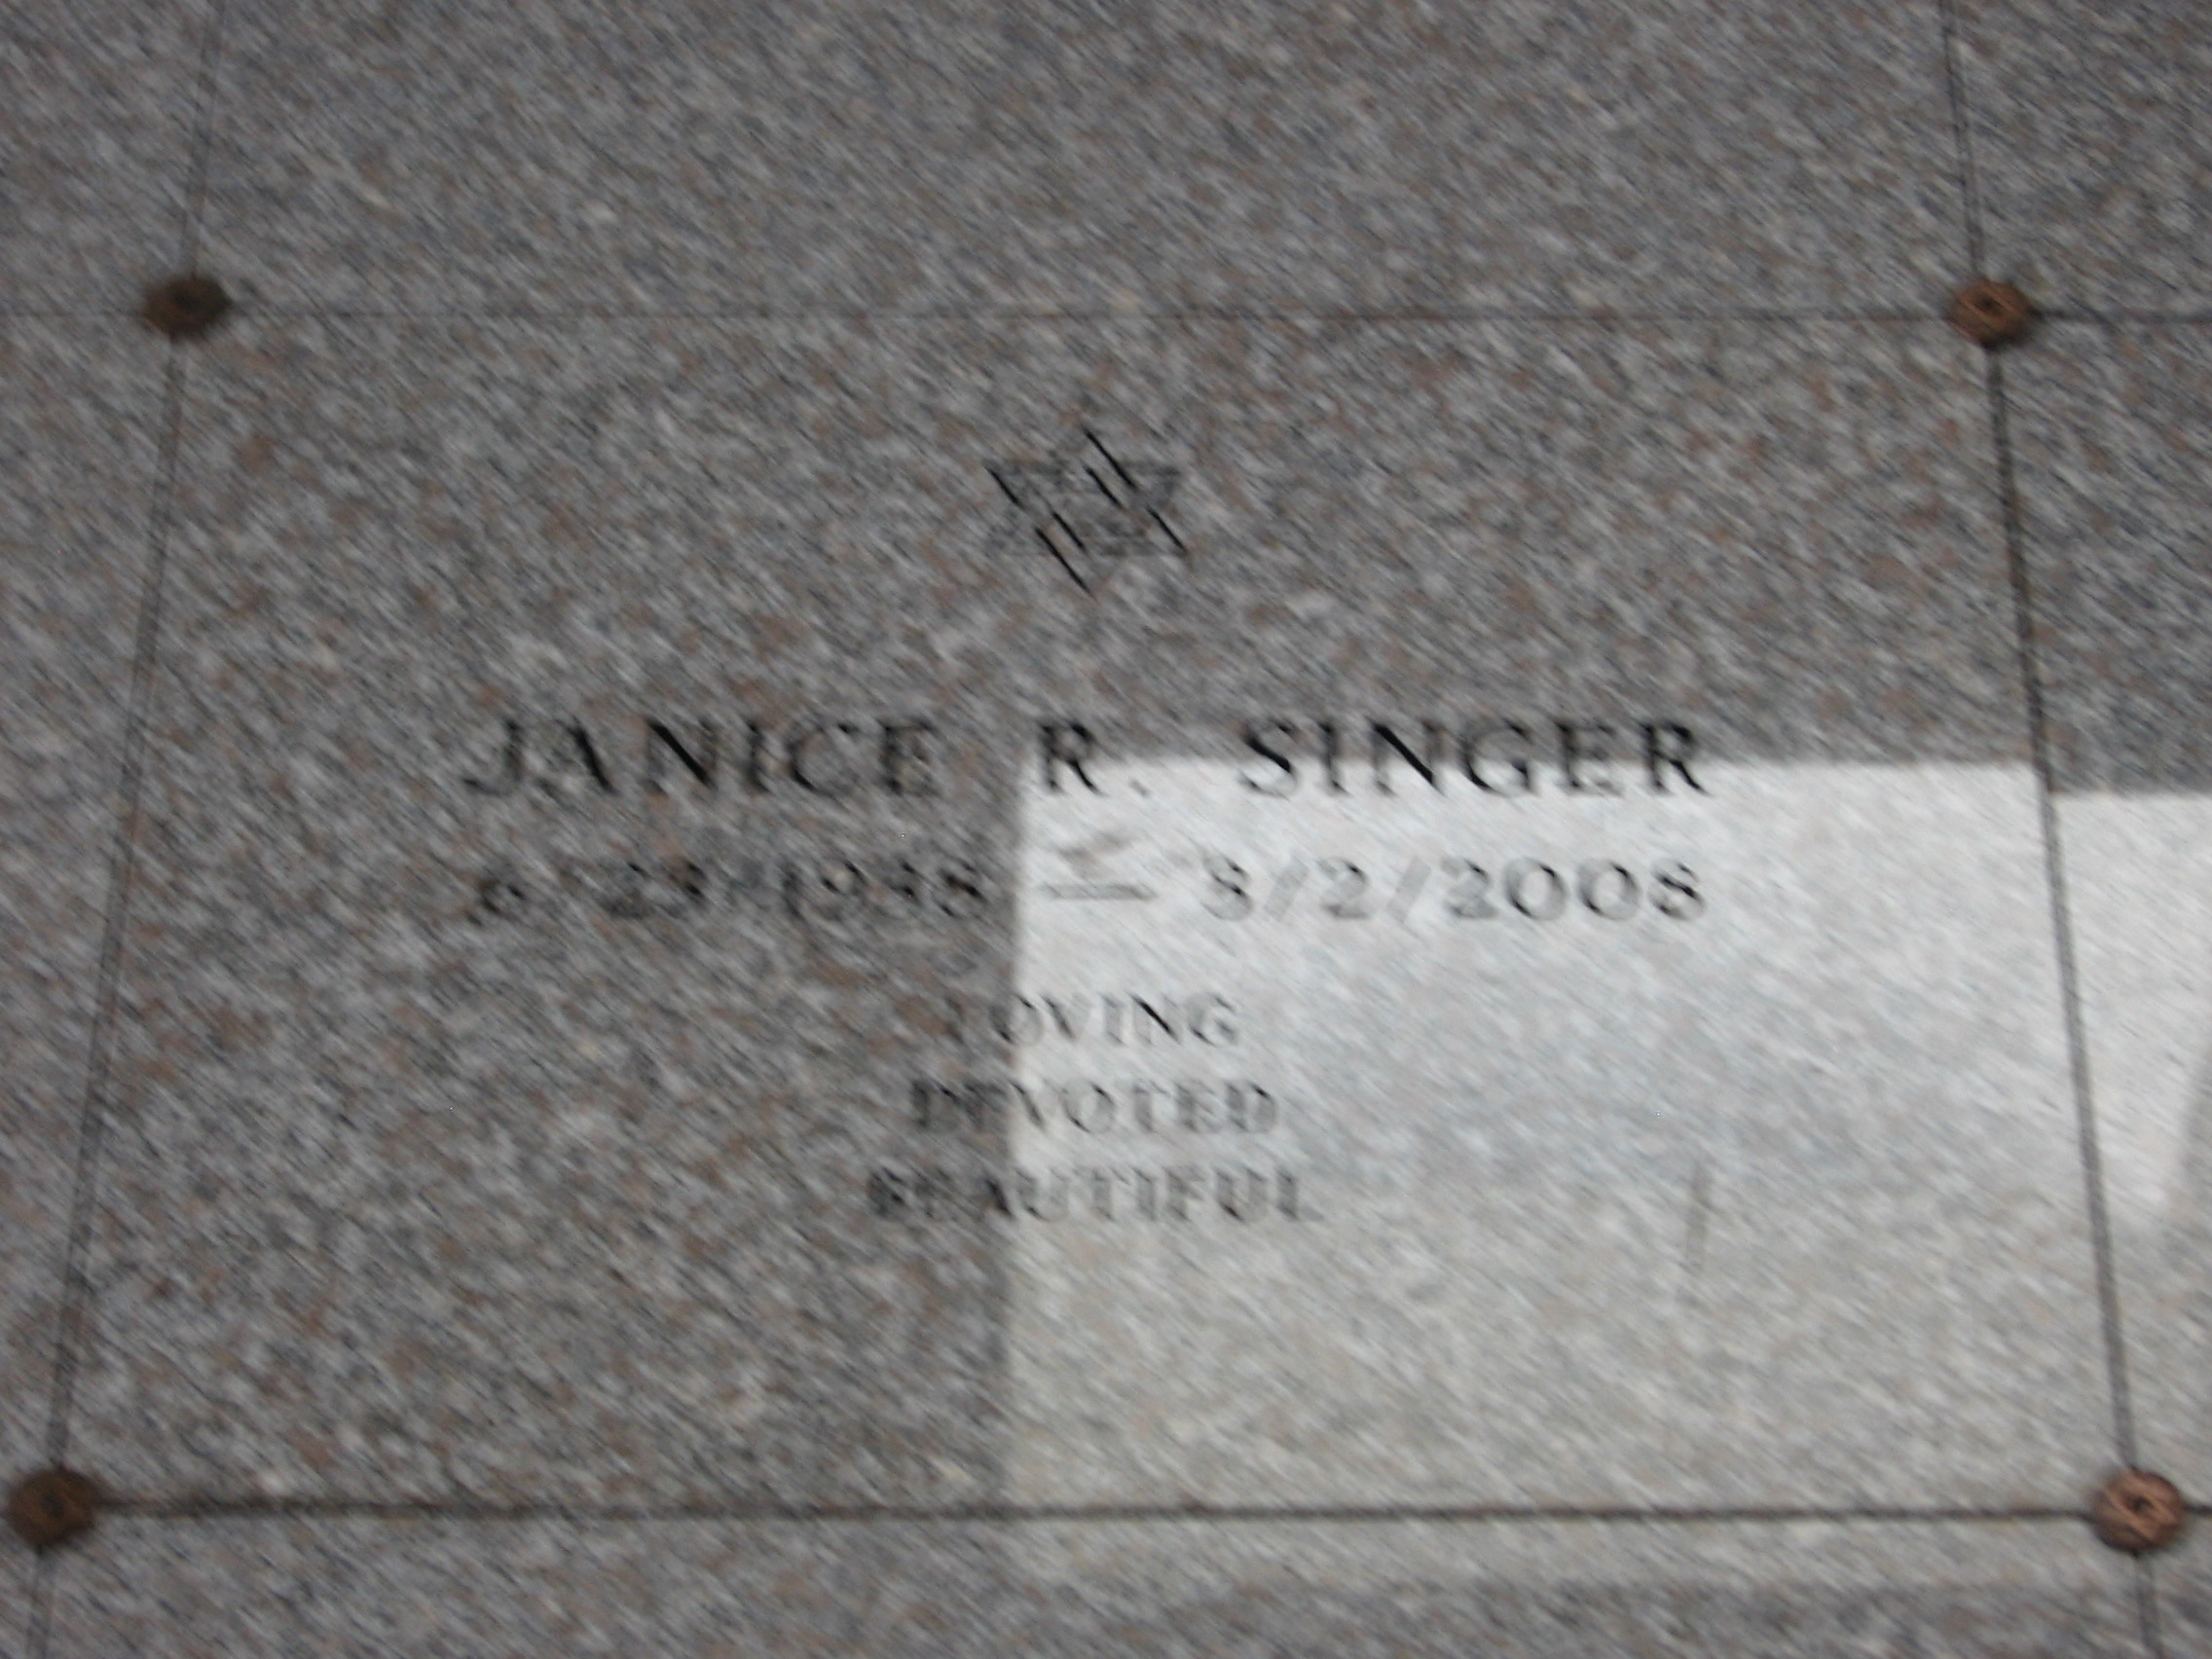 Janice R Singer